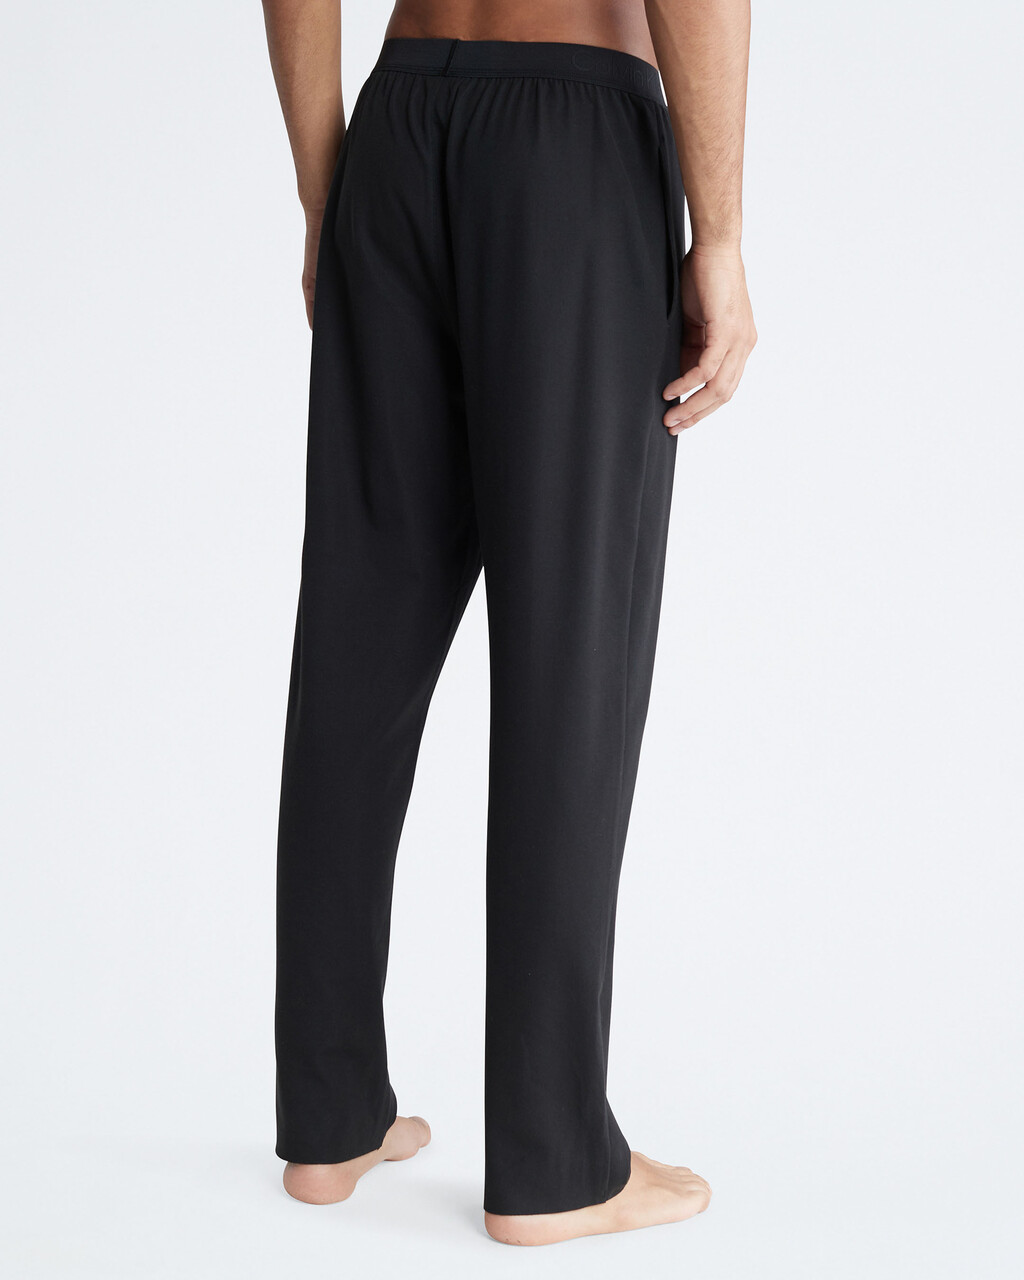 CK Black Pyjama Pants, Black, hi-res